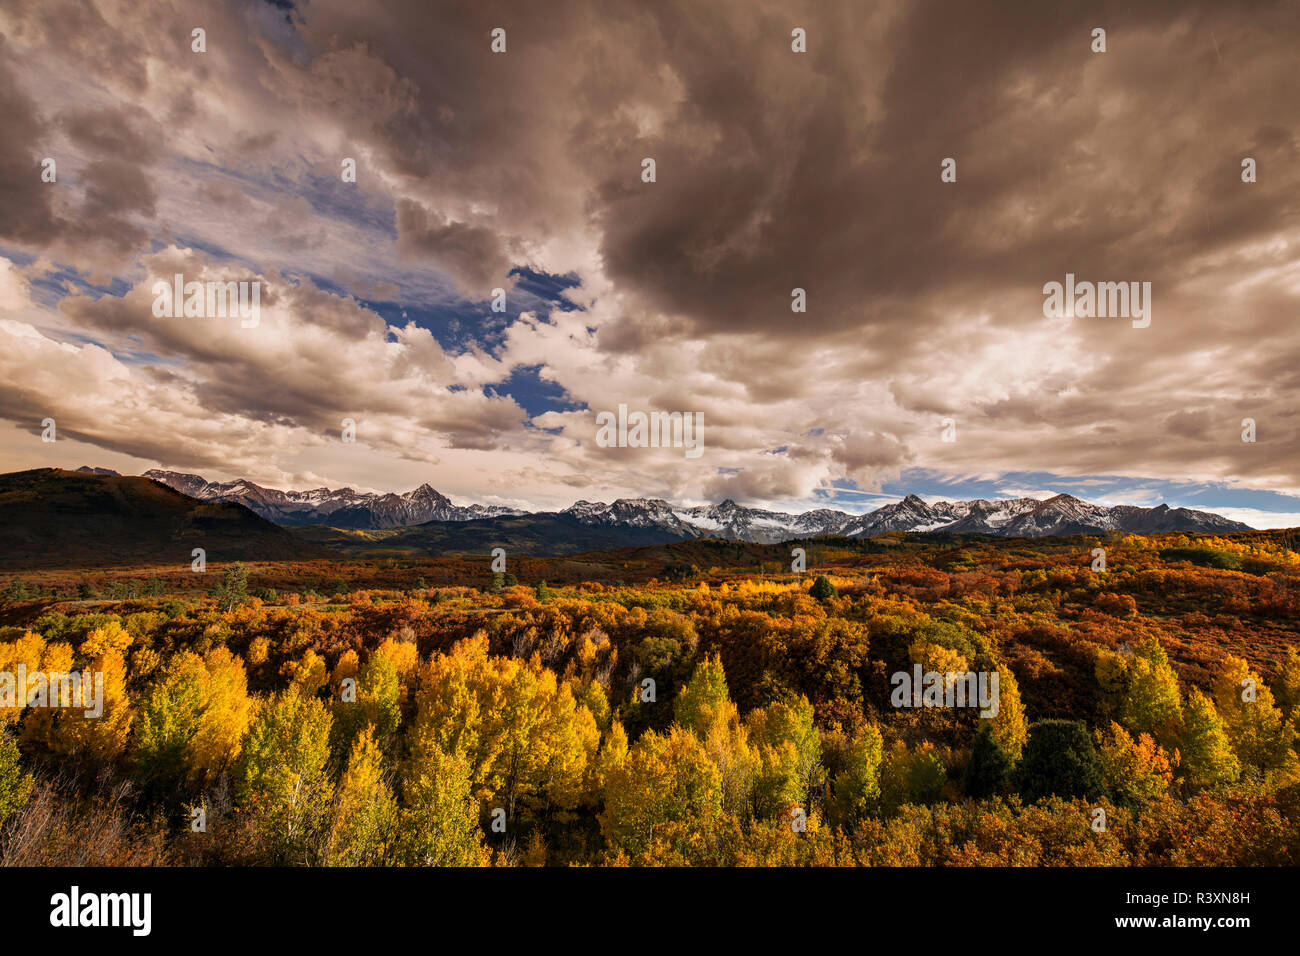 Autumn aspen trees and Sneffels Range, Mount Sneffels Wilderness, Uncompahgre National Forest, Colorado Stock Photo